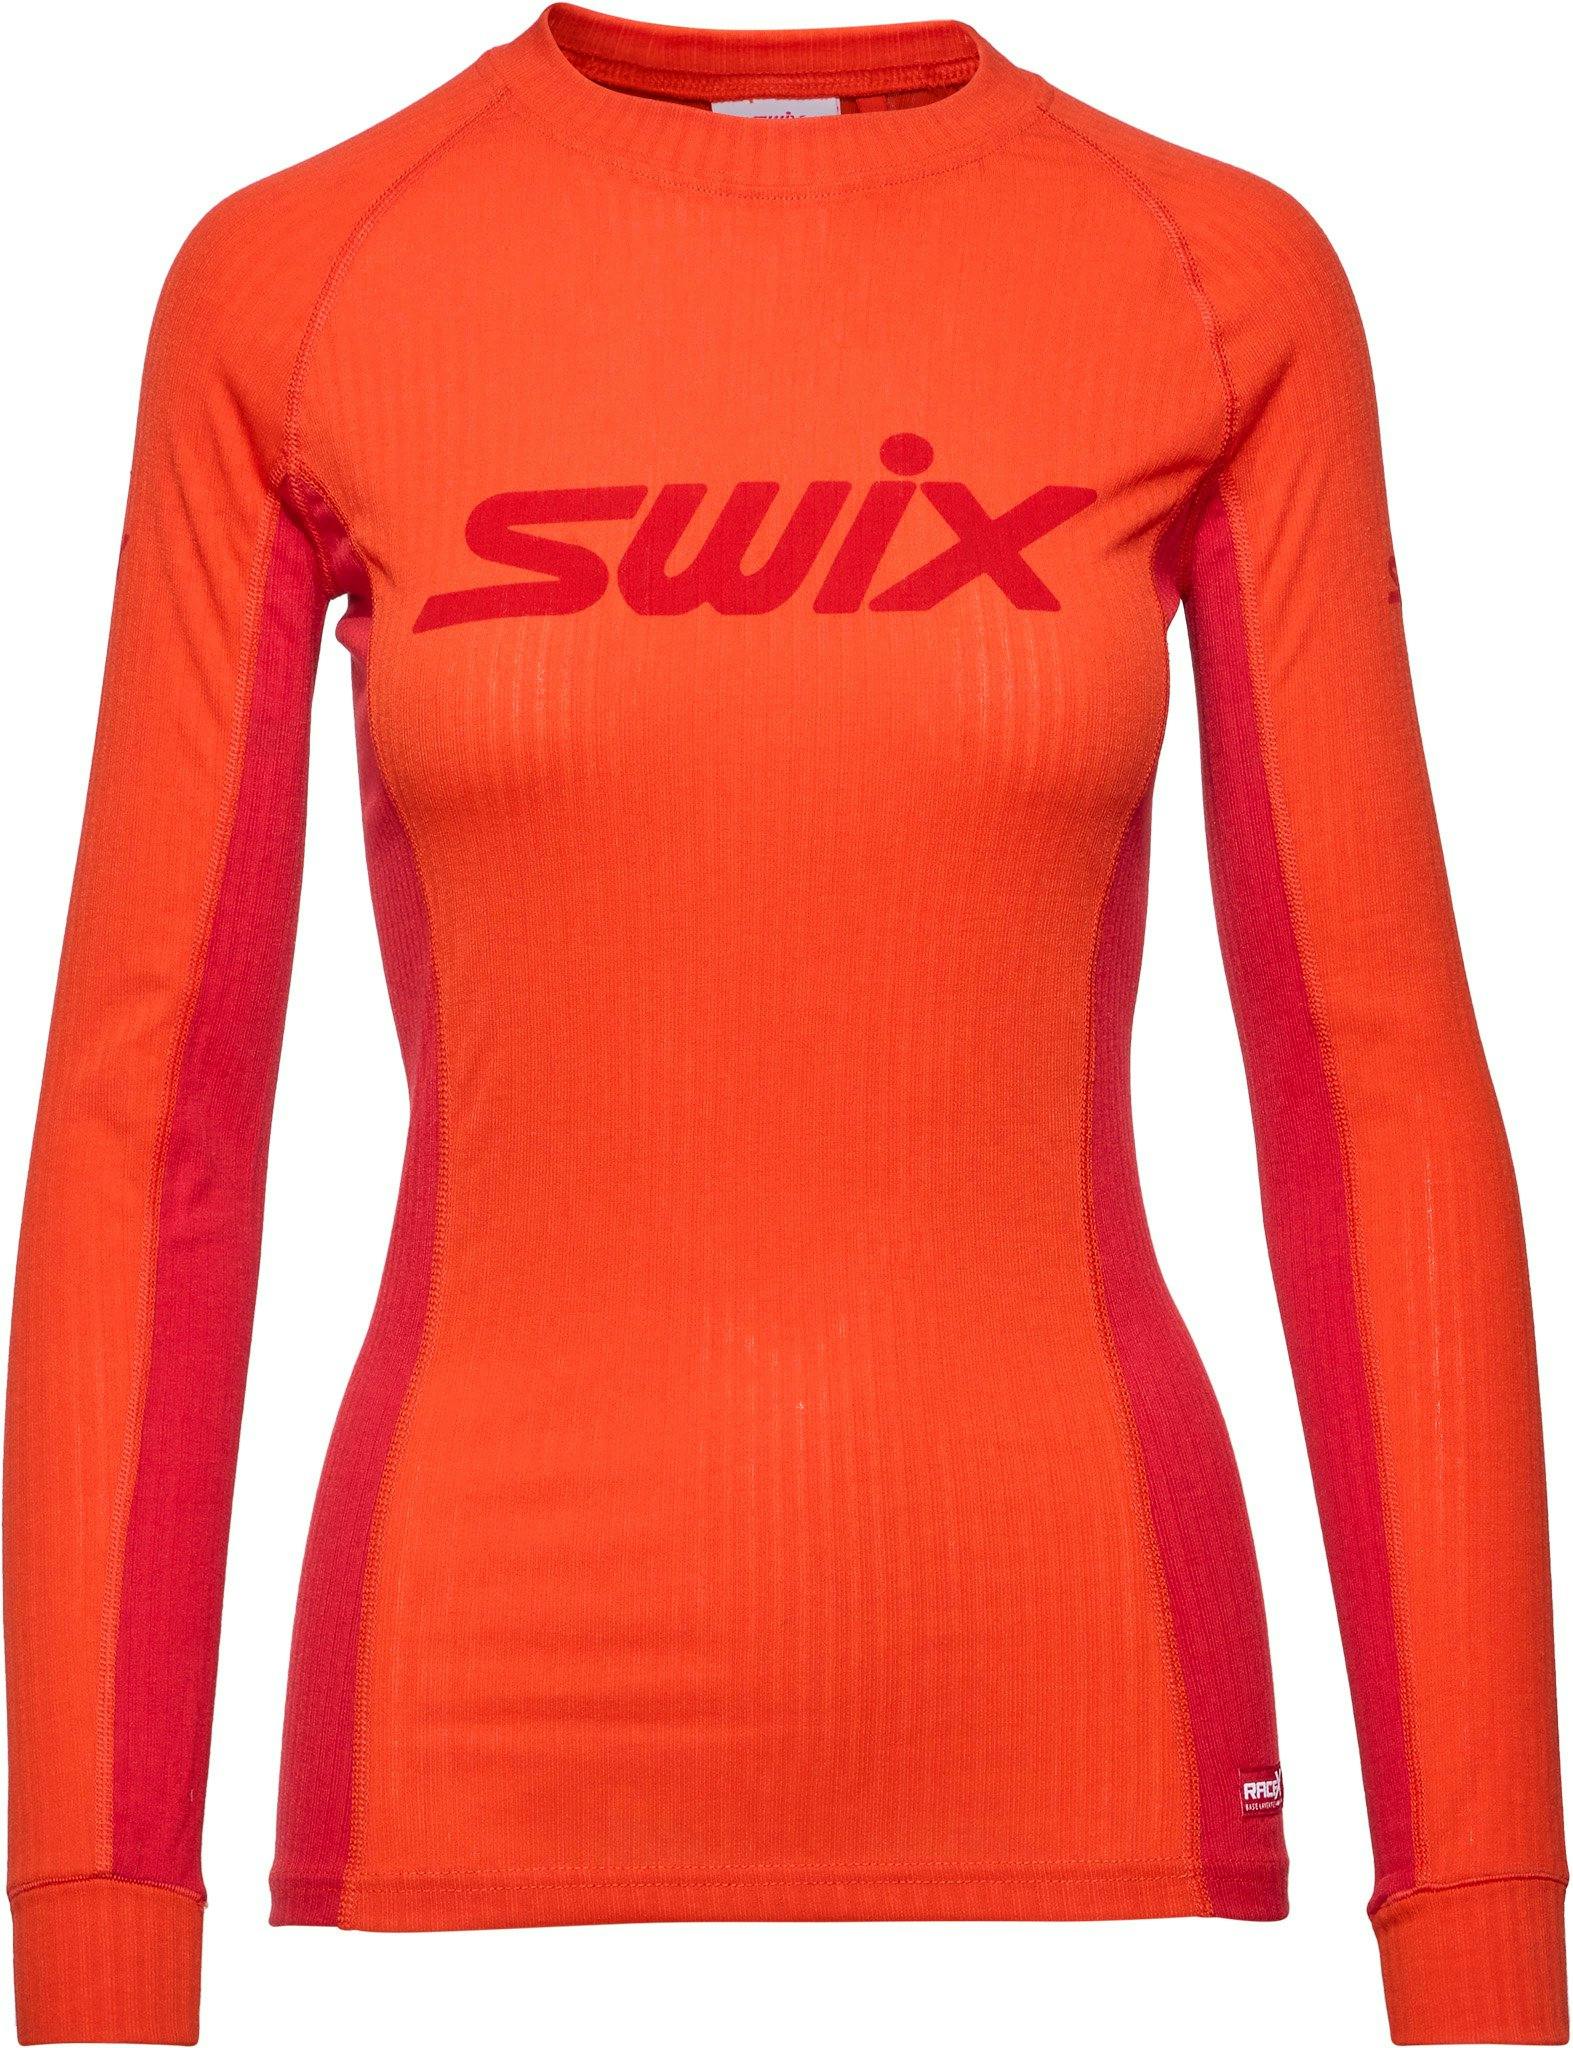 Product image for RaceX Bodywear Long Sleeve Jersey - Women's